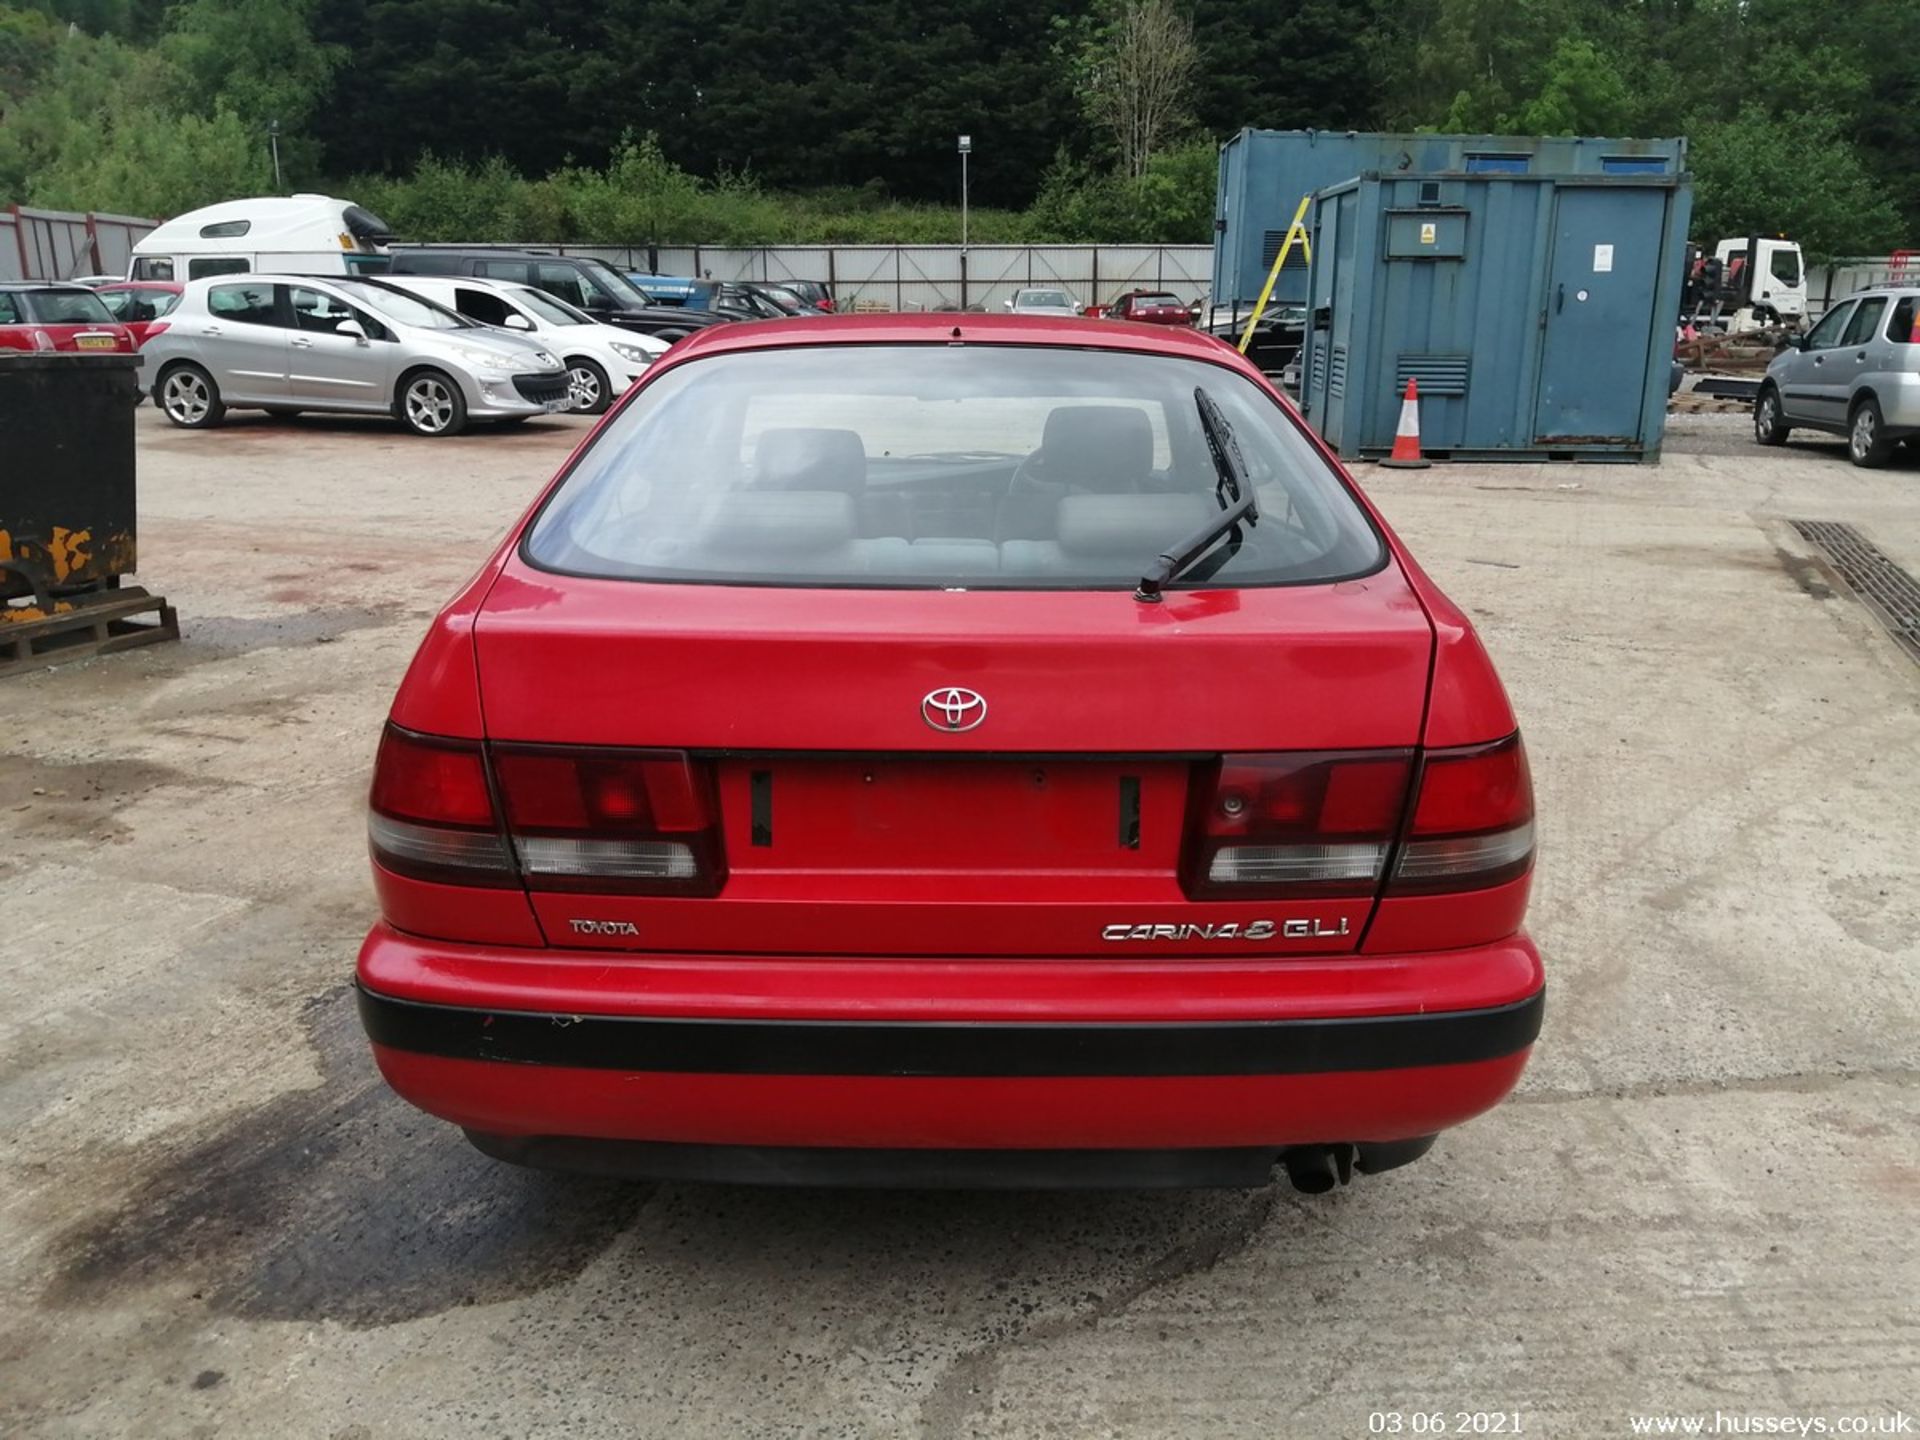 1993 TOYOTA CARINA E GLI AUTO - 1587cc 5dr Hatchback (Red) - Image 4 of 10